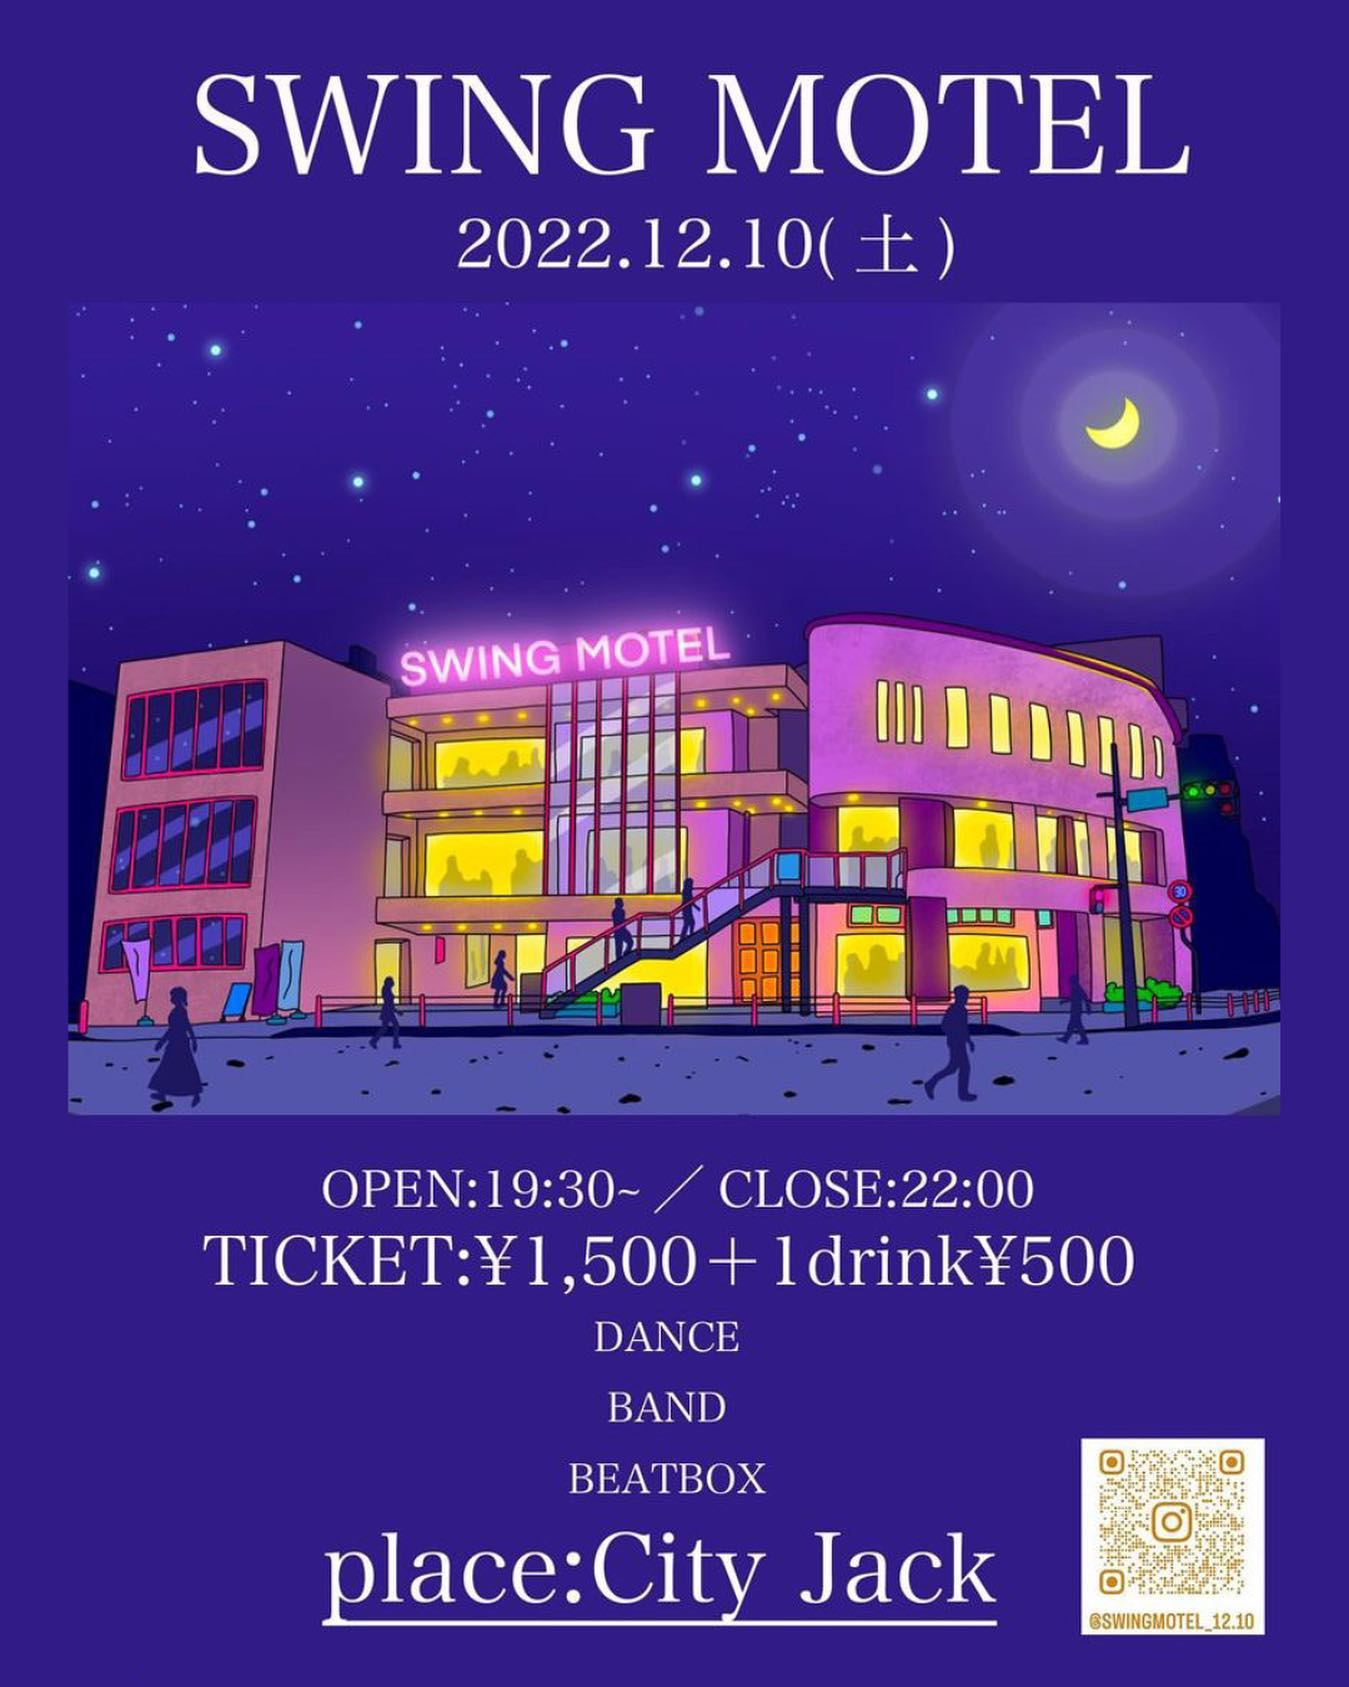 SWING MOTEL
2022.12.10(土)
DANCE
BAND
BEAT BOX
OPEN 19:30〜
Ticket 1,500円(別途ドリンク)
Place: CITY JACK

チケット購入・出演者の詳細は公式アカウントにて
↓↓↓
@swingmotel_12.10 
.
#swingmotel #dance #band #beatbox #ishigaki